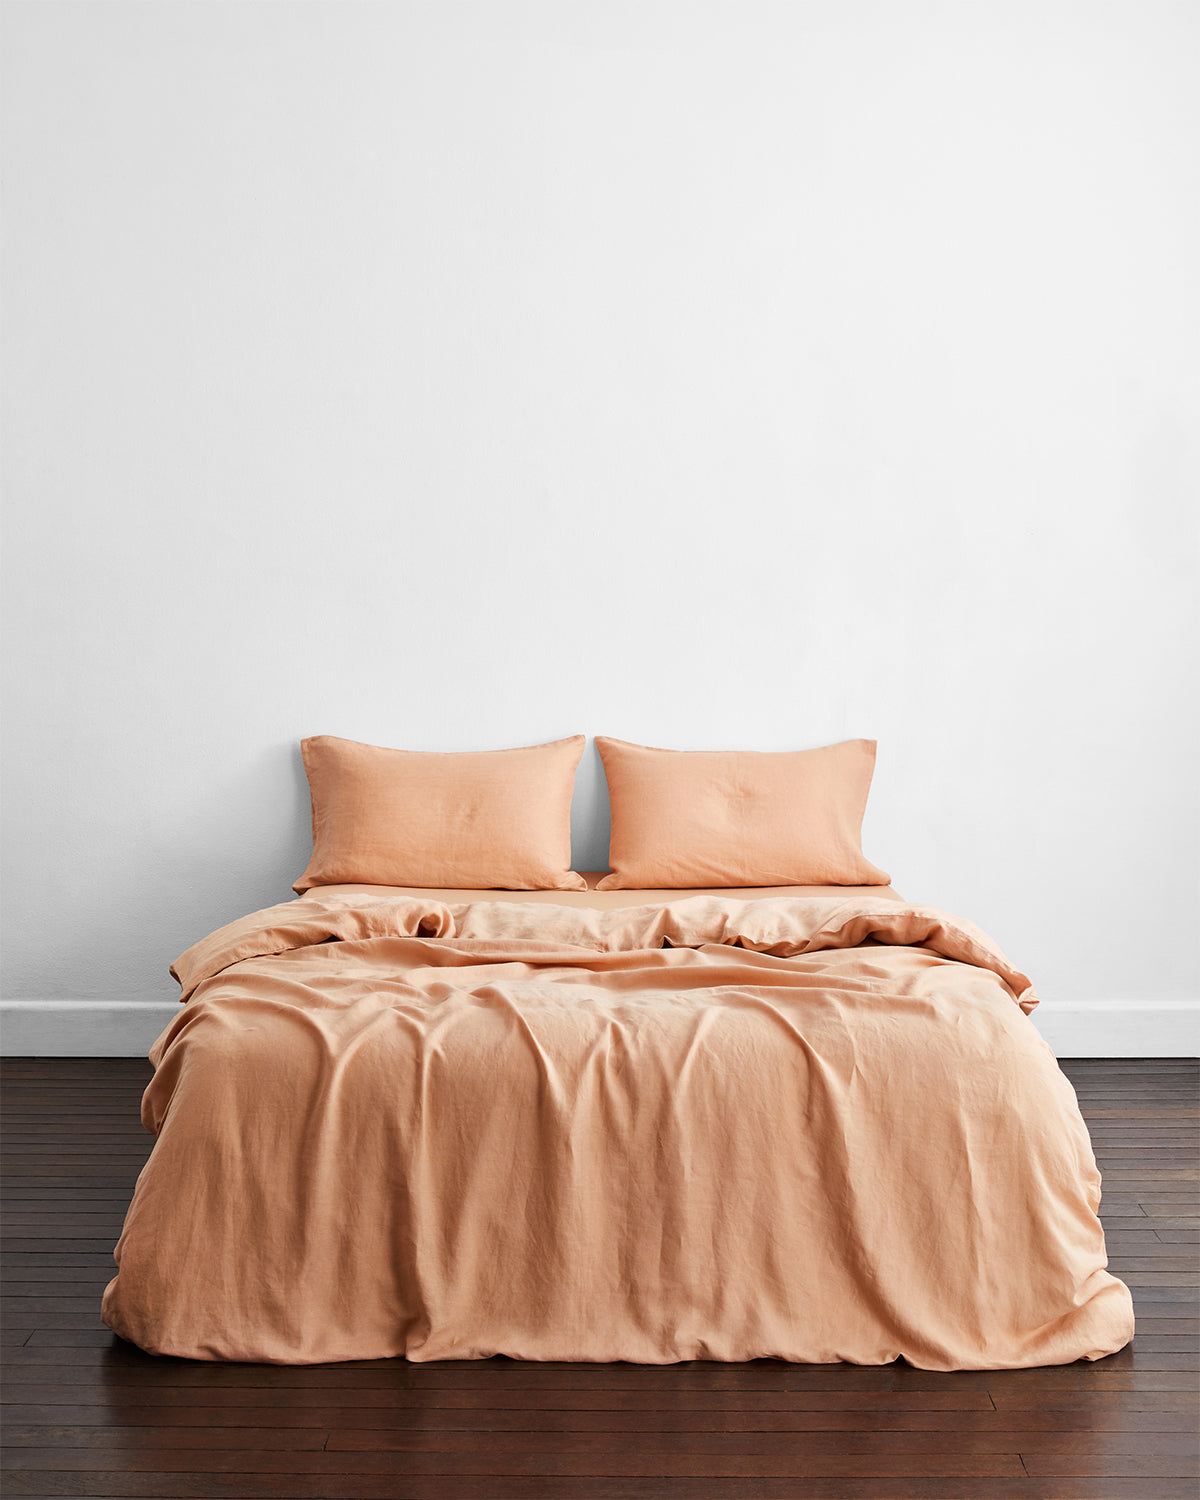 100% Linen Bedding Bundle, 100% Linen Bed Sheets